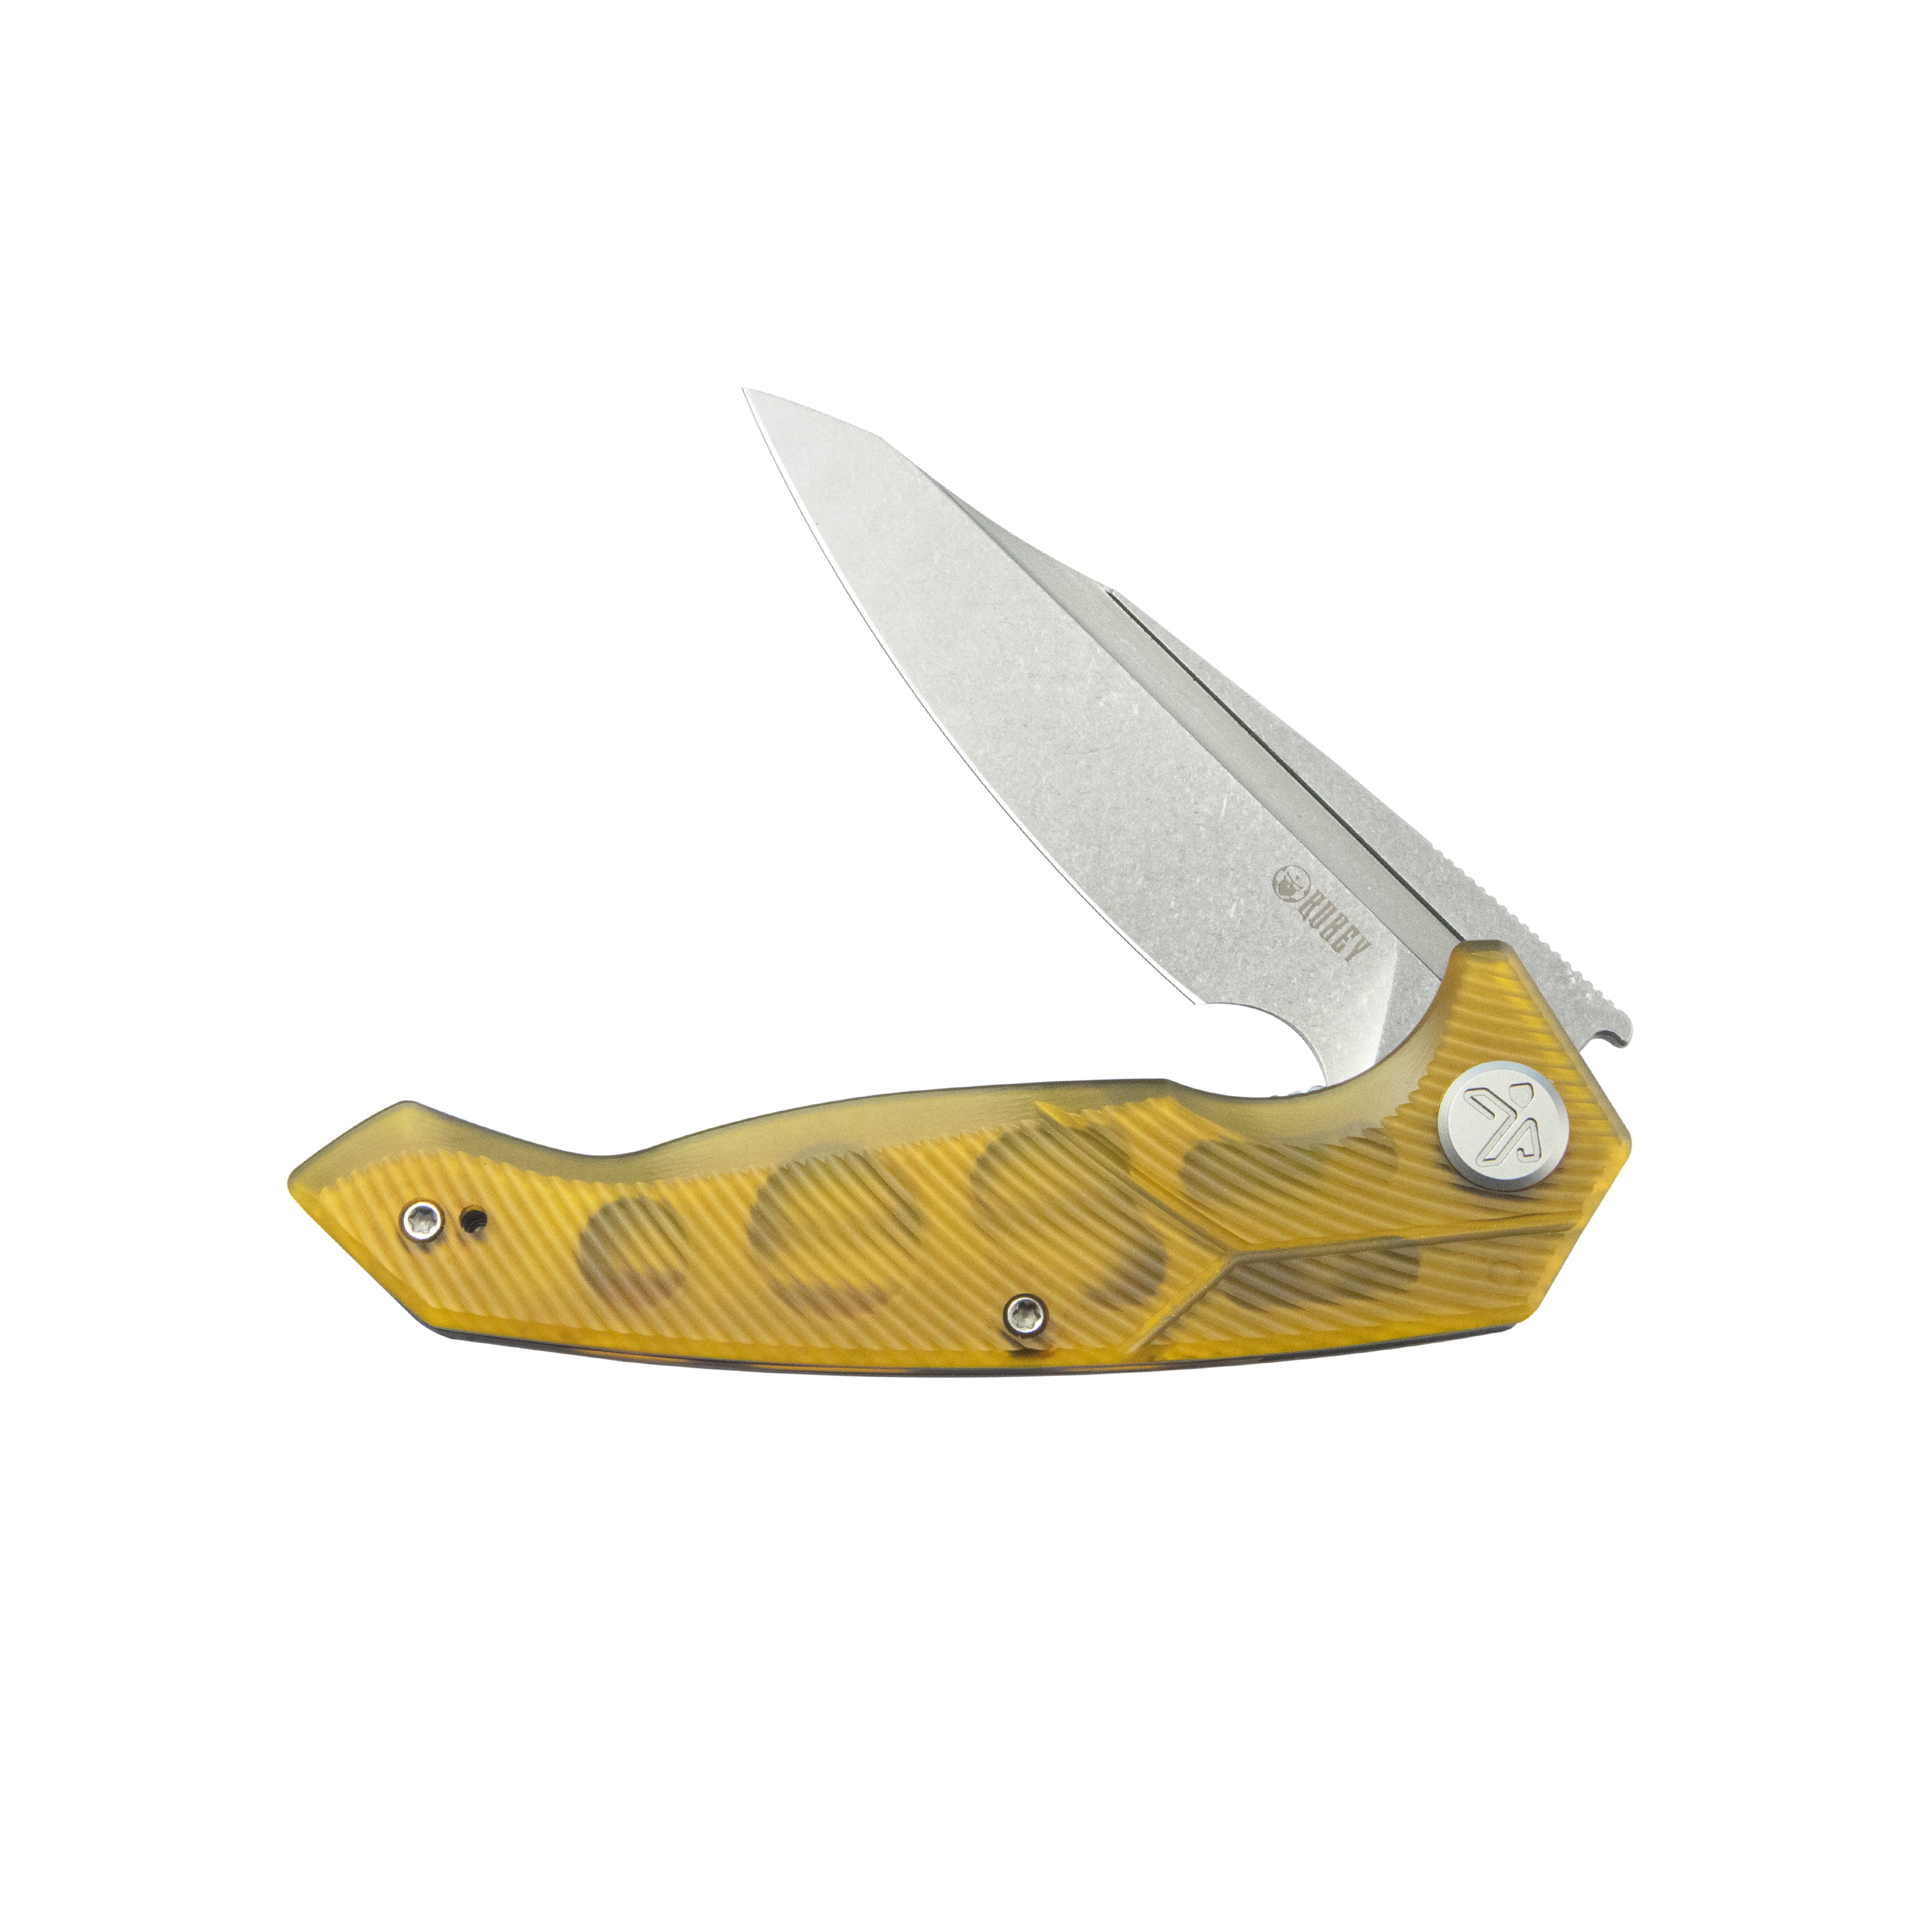 Kubey RBC-1 Outdoor Flipper Knife Ultem Handle 3.46" Stonewash 14C28N KU373D